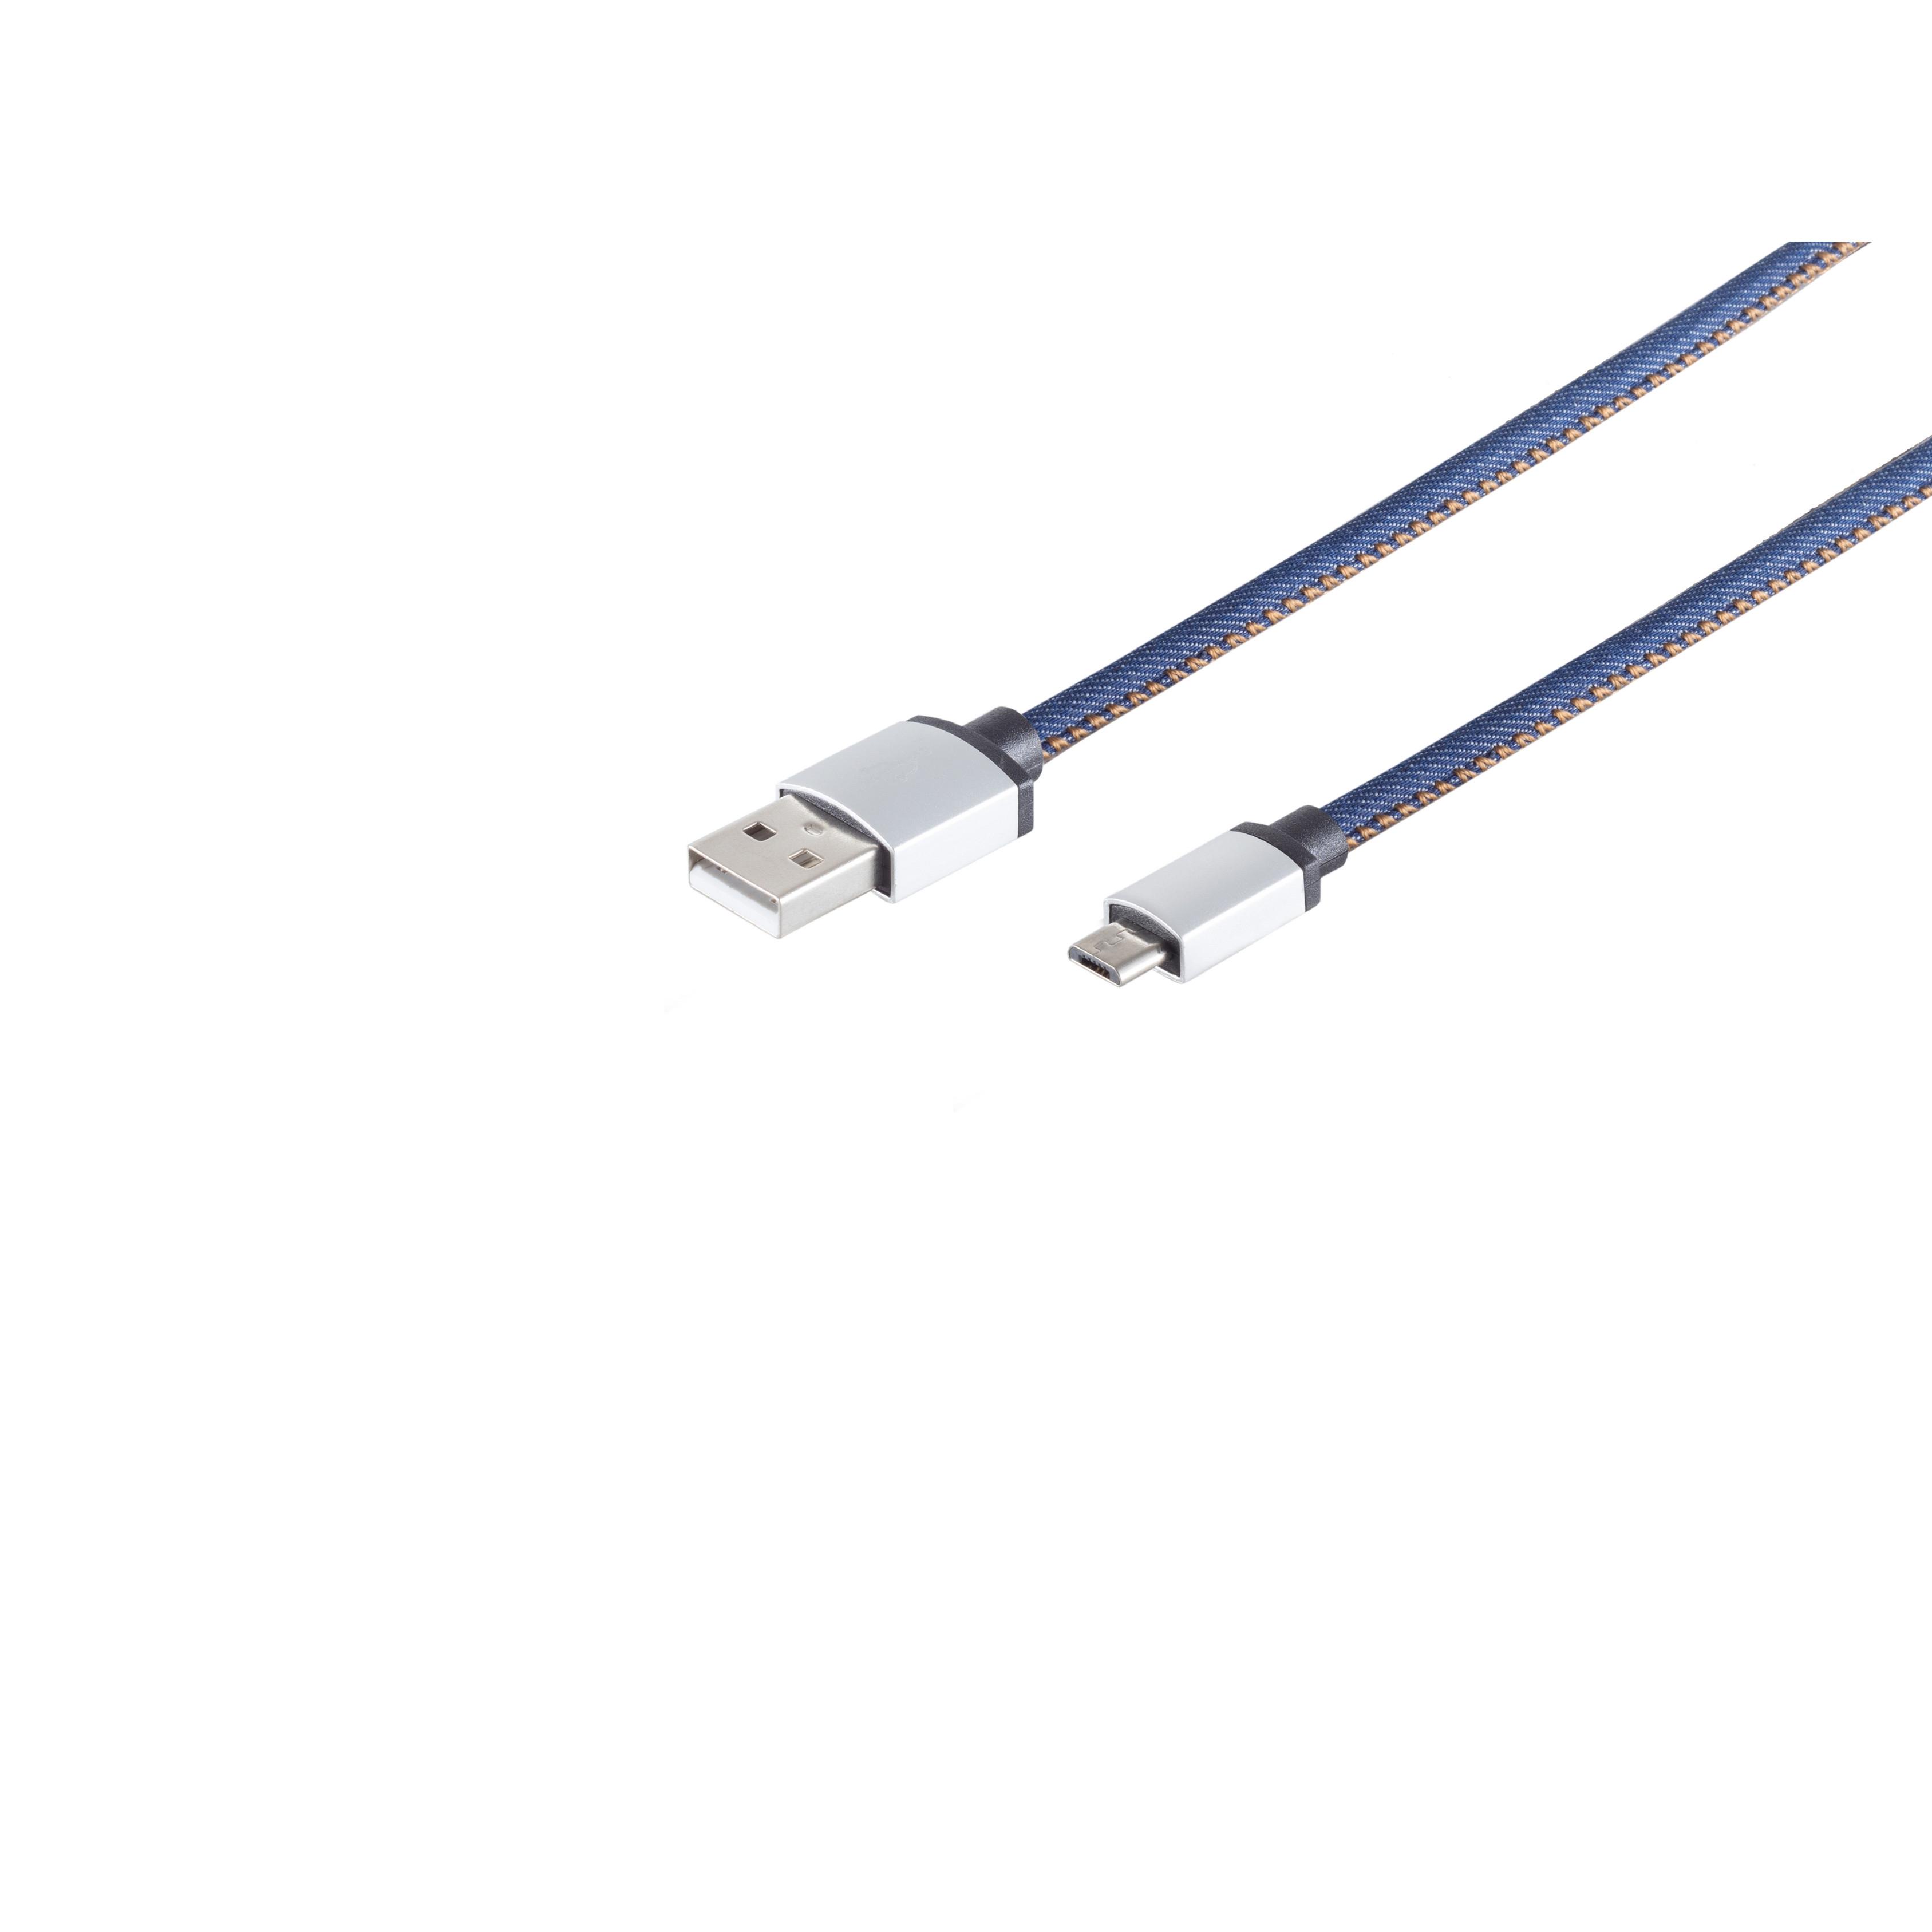 B, Kabel USB MAXIMUM auf 1m A USB S/CONN CONNECTIVITY Micro USB-Ladekabel blau Stecker